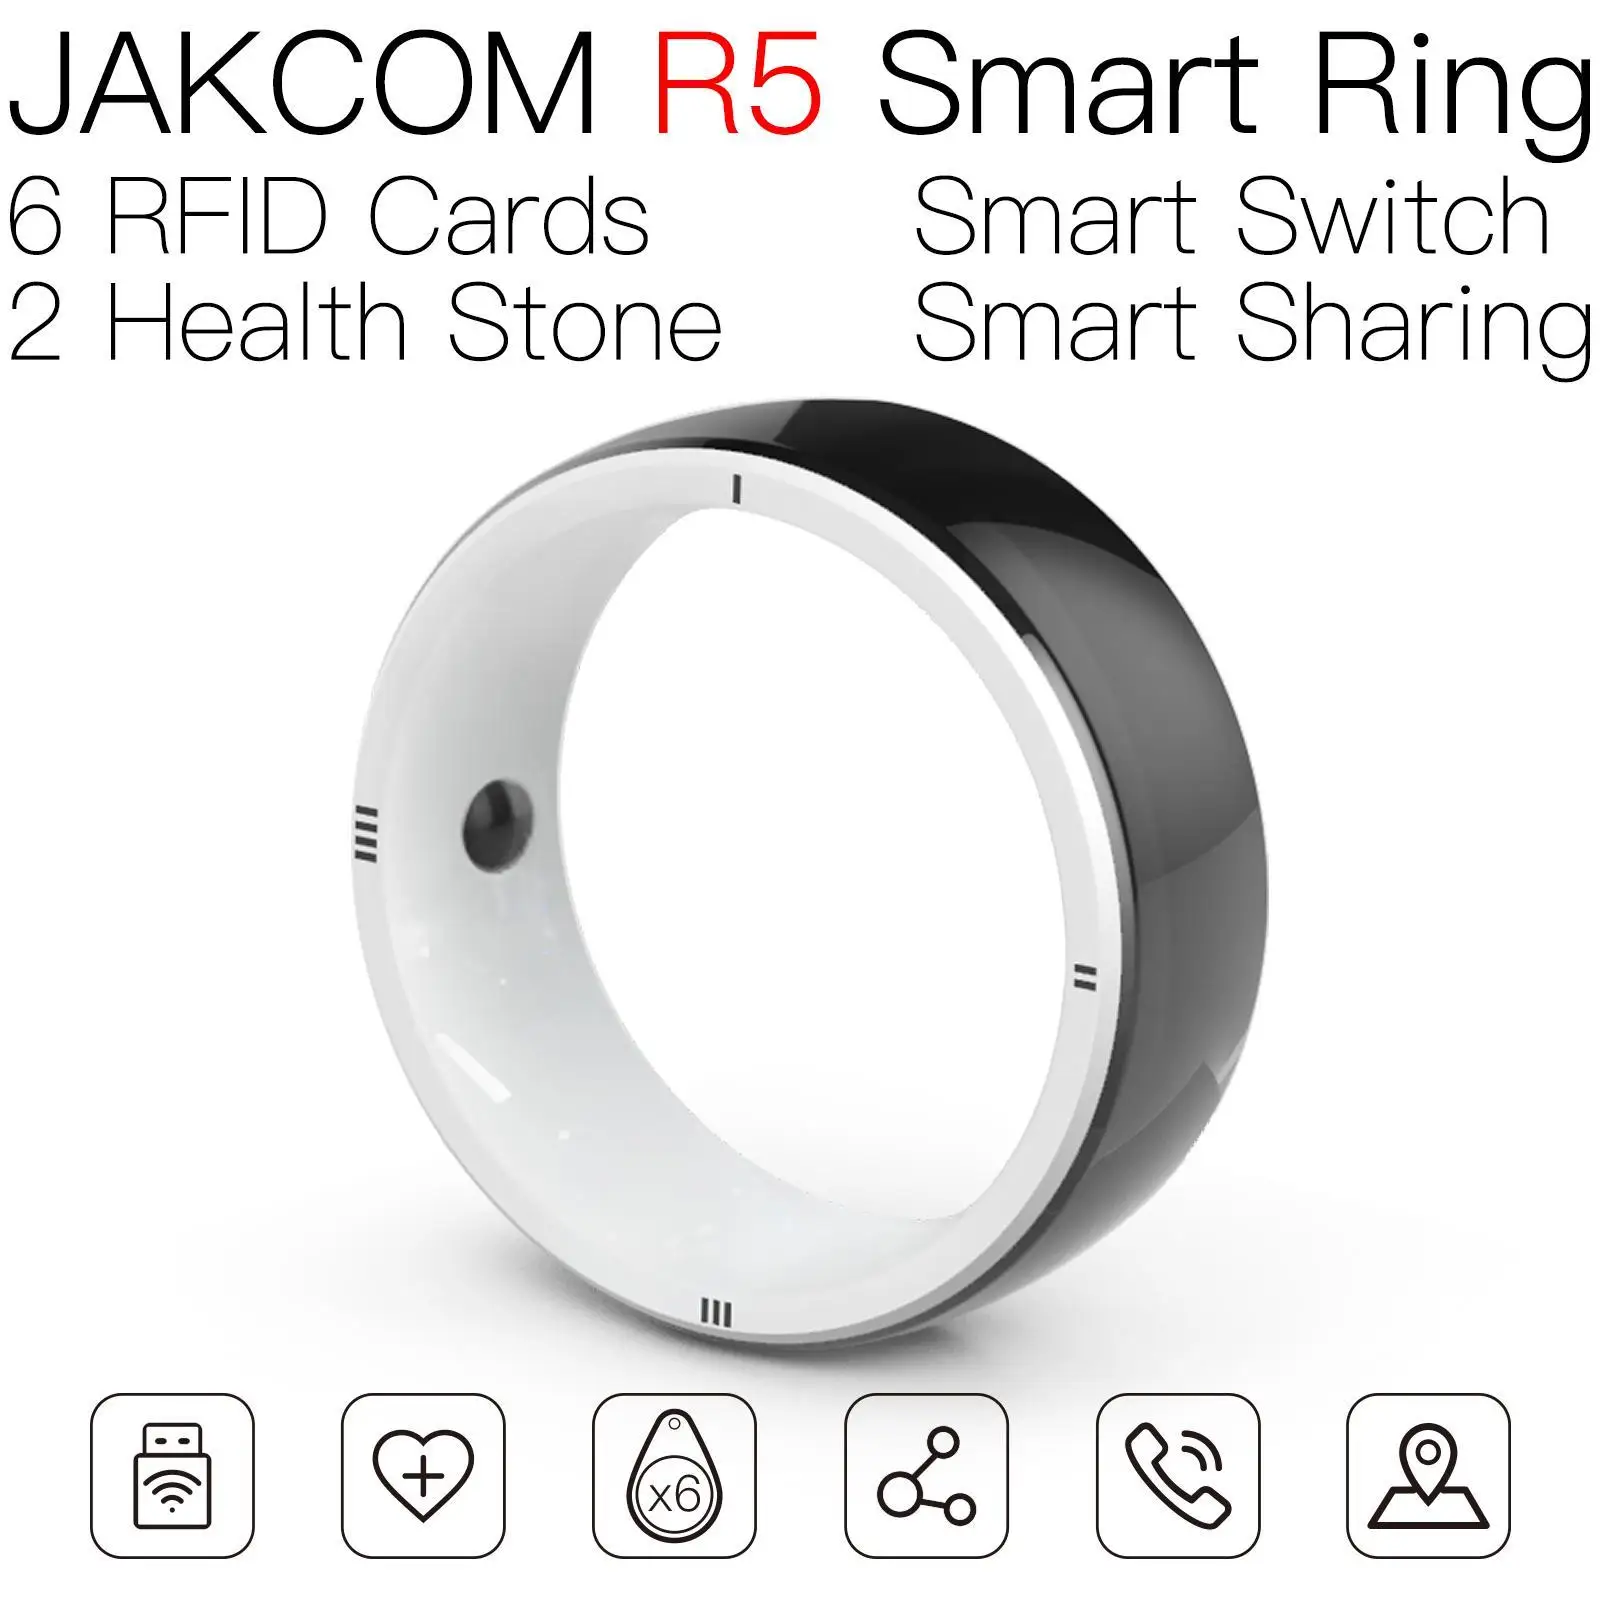 

JAKCOM R5 Smart Ring better than read witer all key rfid uhf tag printer camelon nfc foam race chips query unlock gps pet